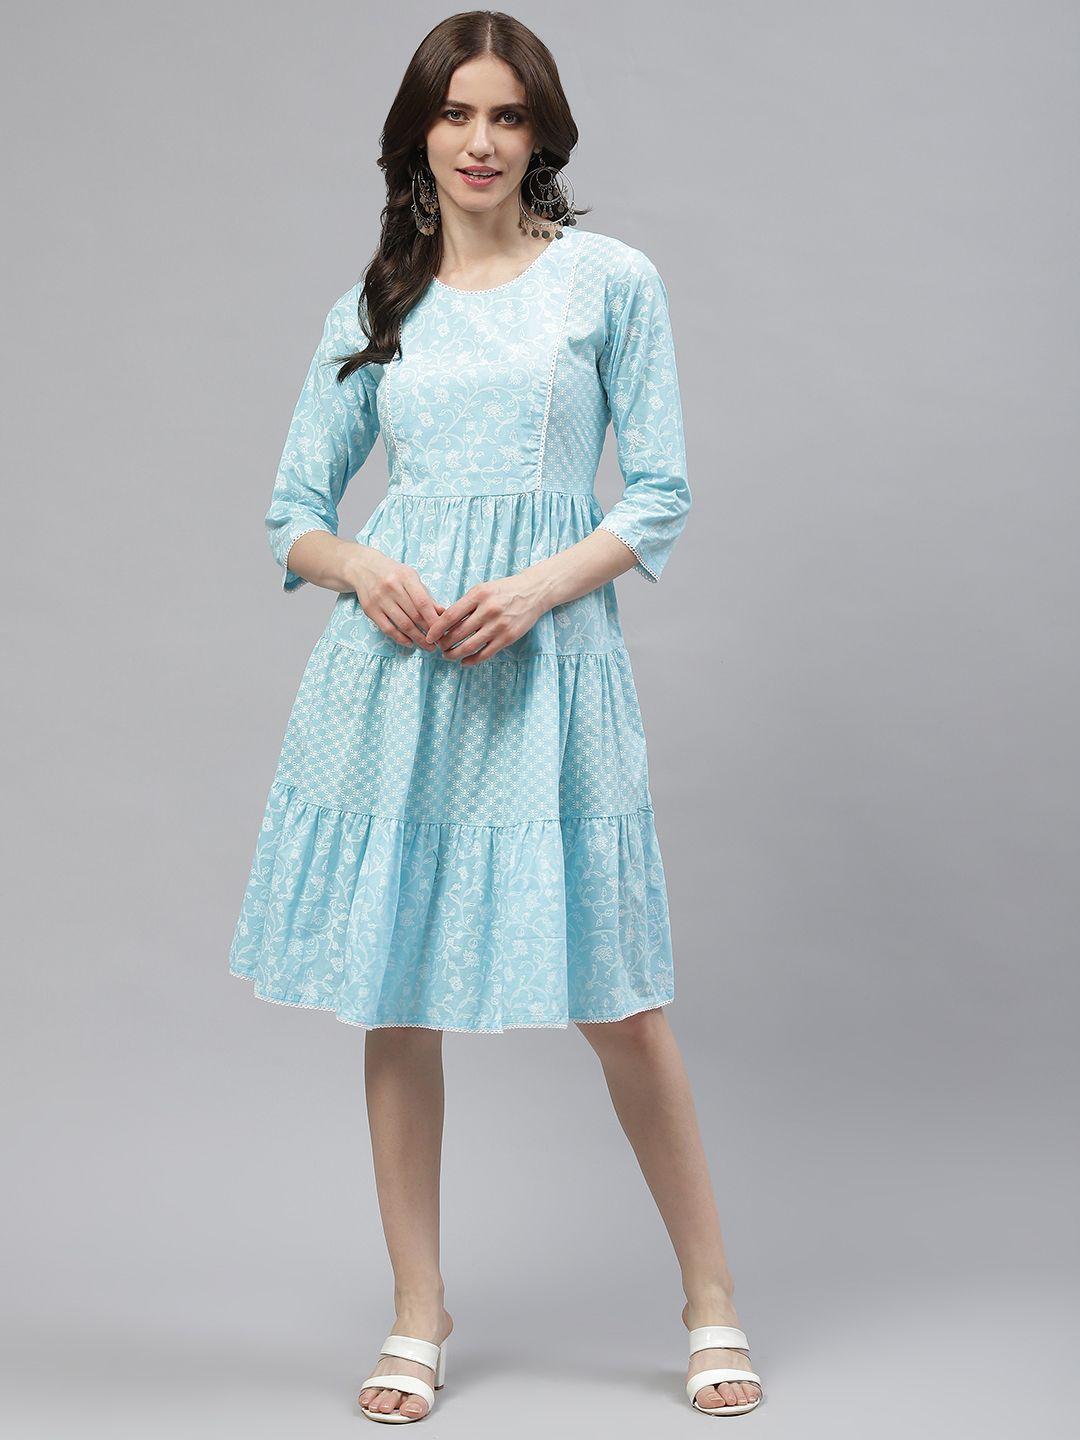 readiprint fashions blue floral printed knee length dress